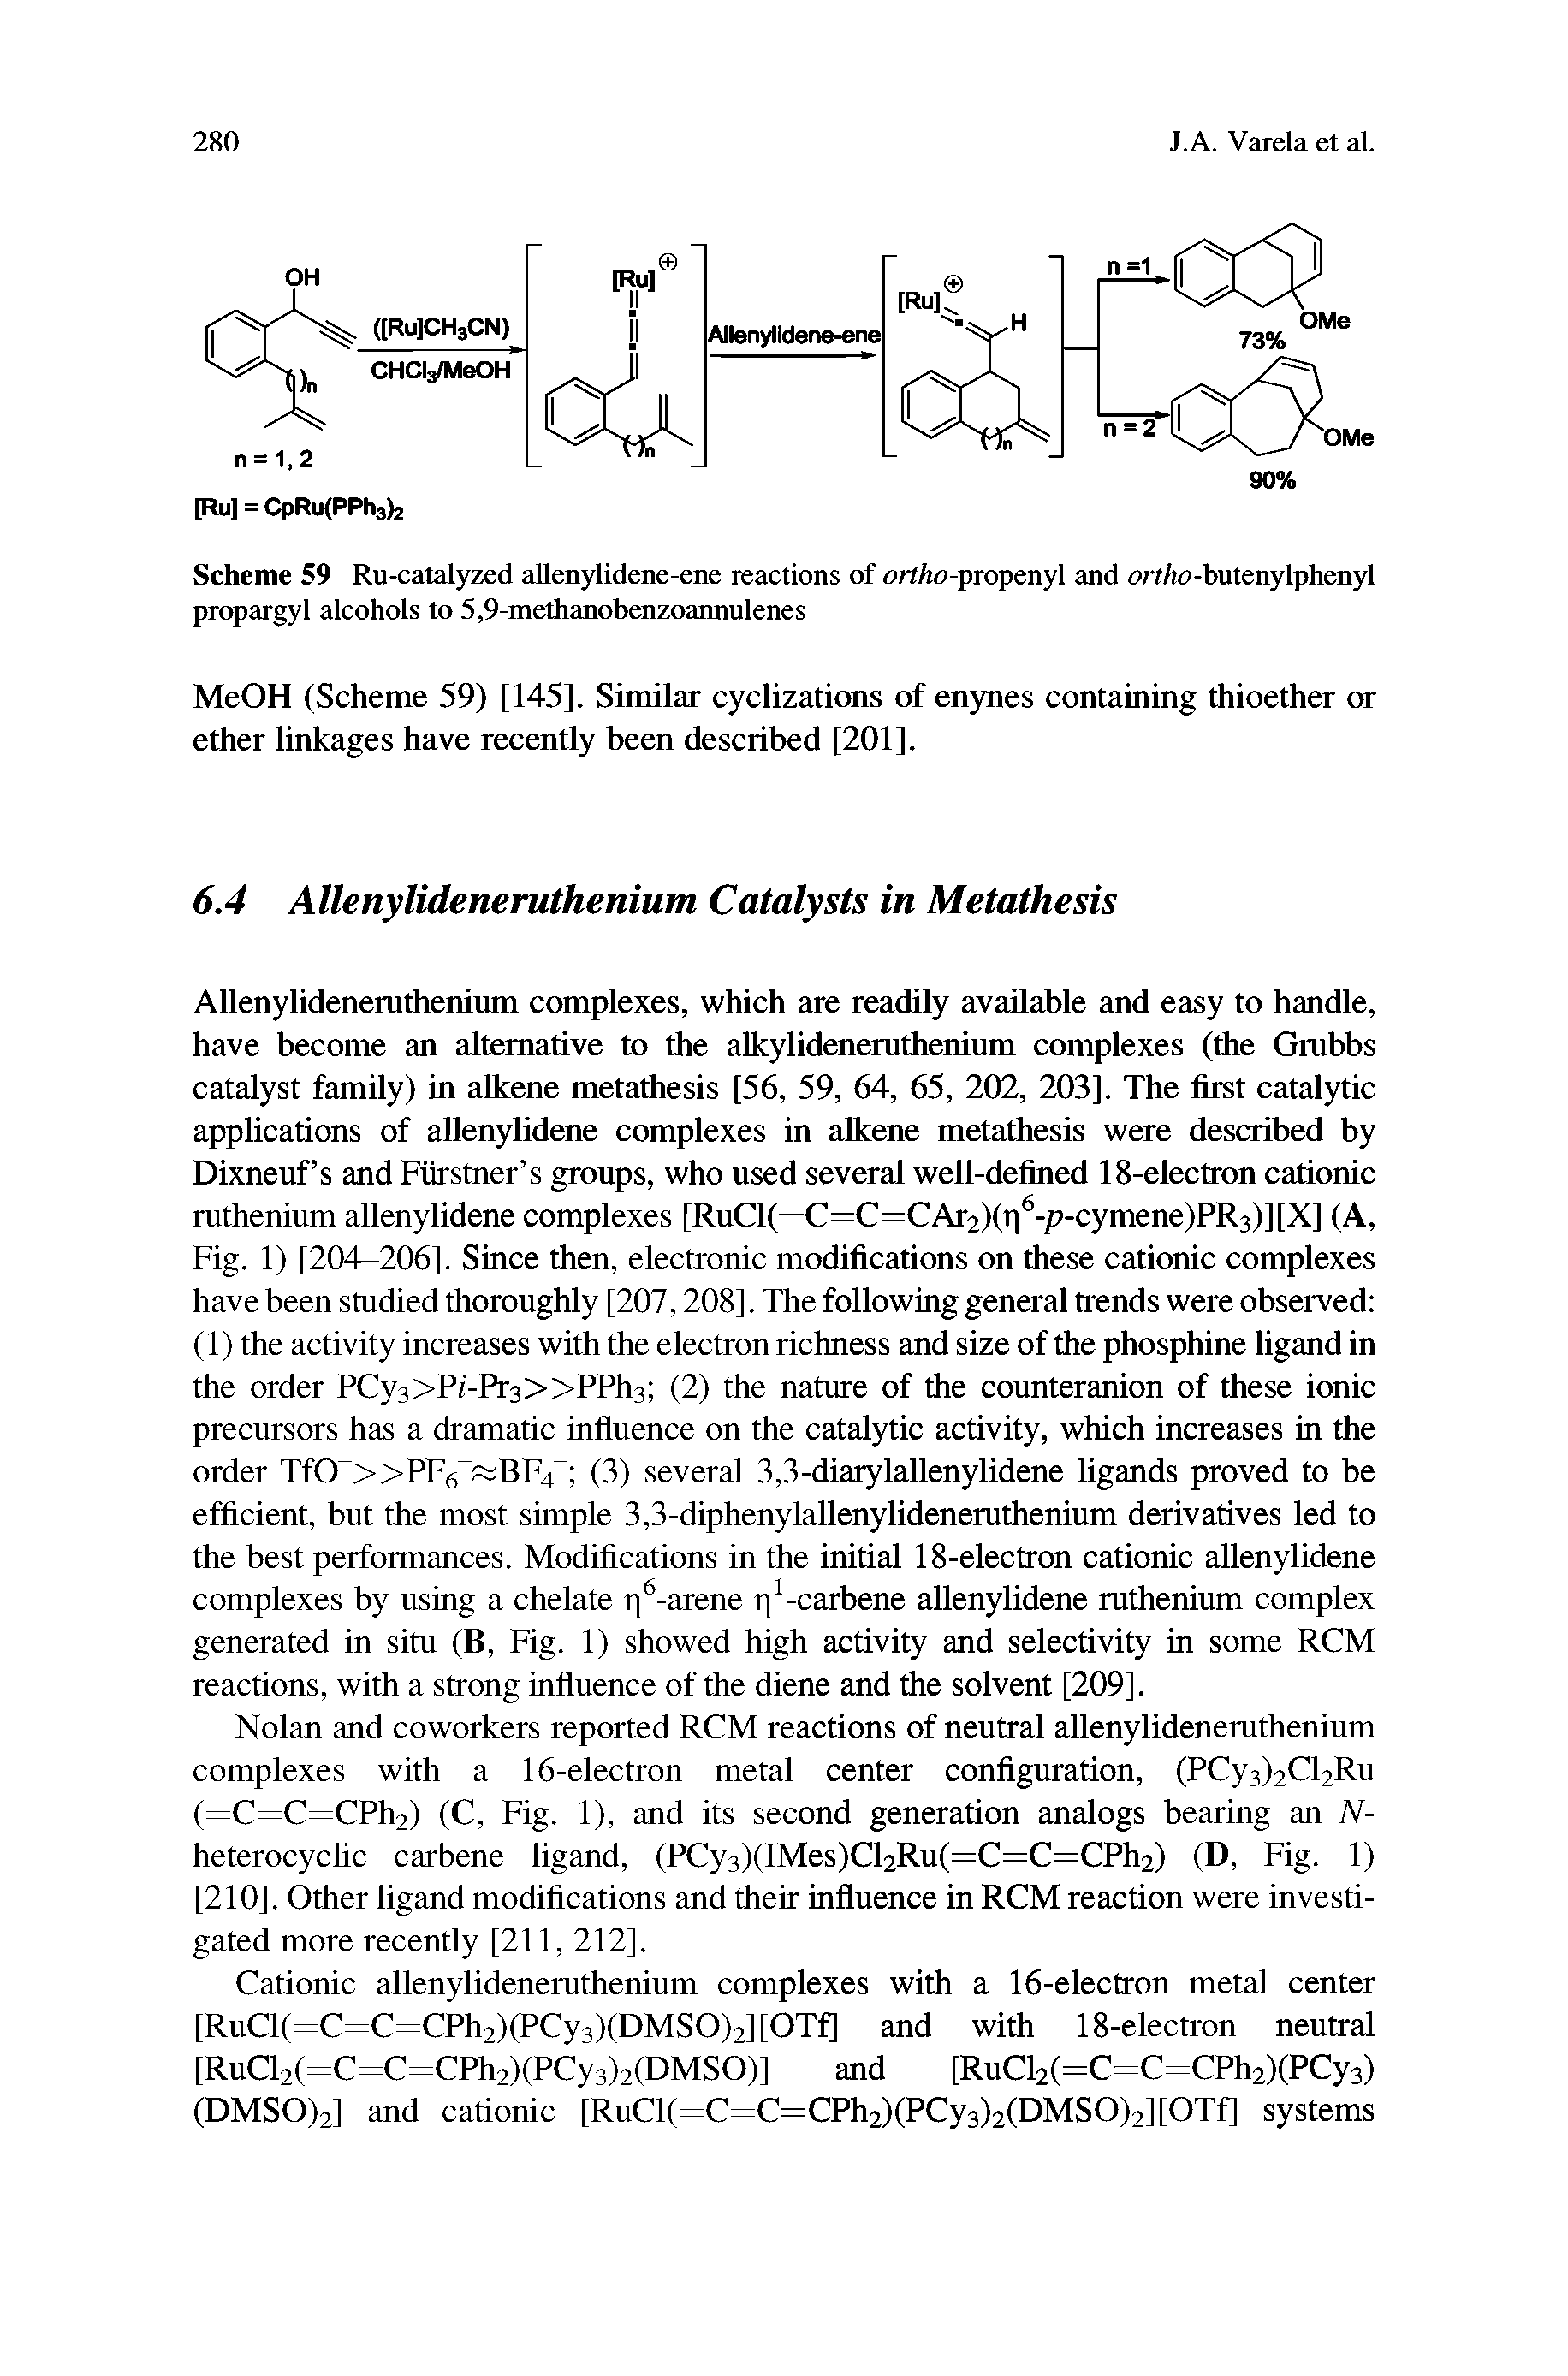 Scheme 59 Ru-catalyzed allenylidene-ene reactions of ortAo-propenyl and ortto-butenylphenyl propargyl alcohols to 5,9-methanobenzoannulenes...